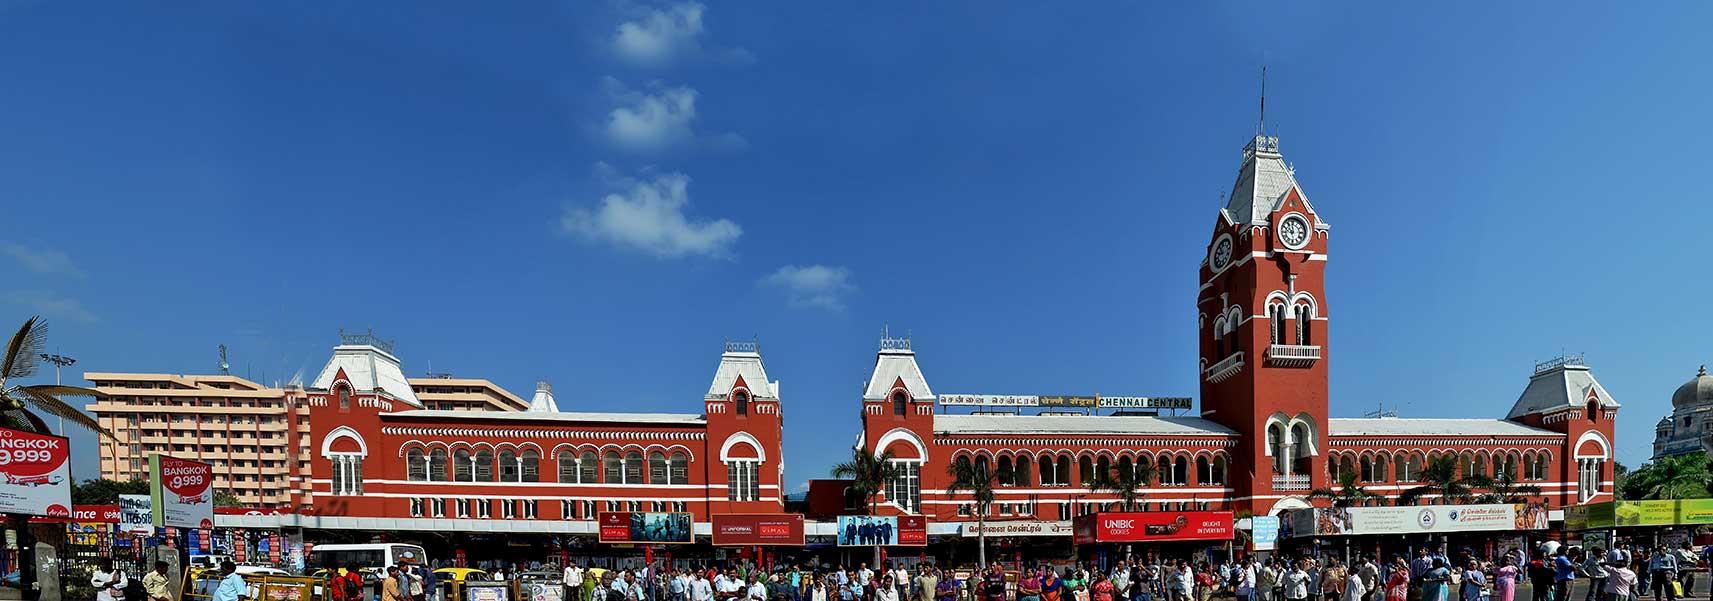 Chennai Central Railway Station, Chennai (Madras) Tamil Nadu, India